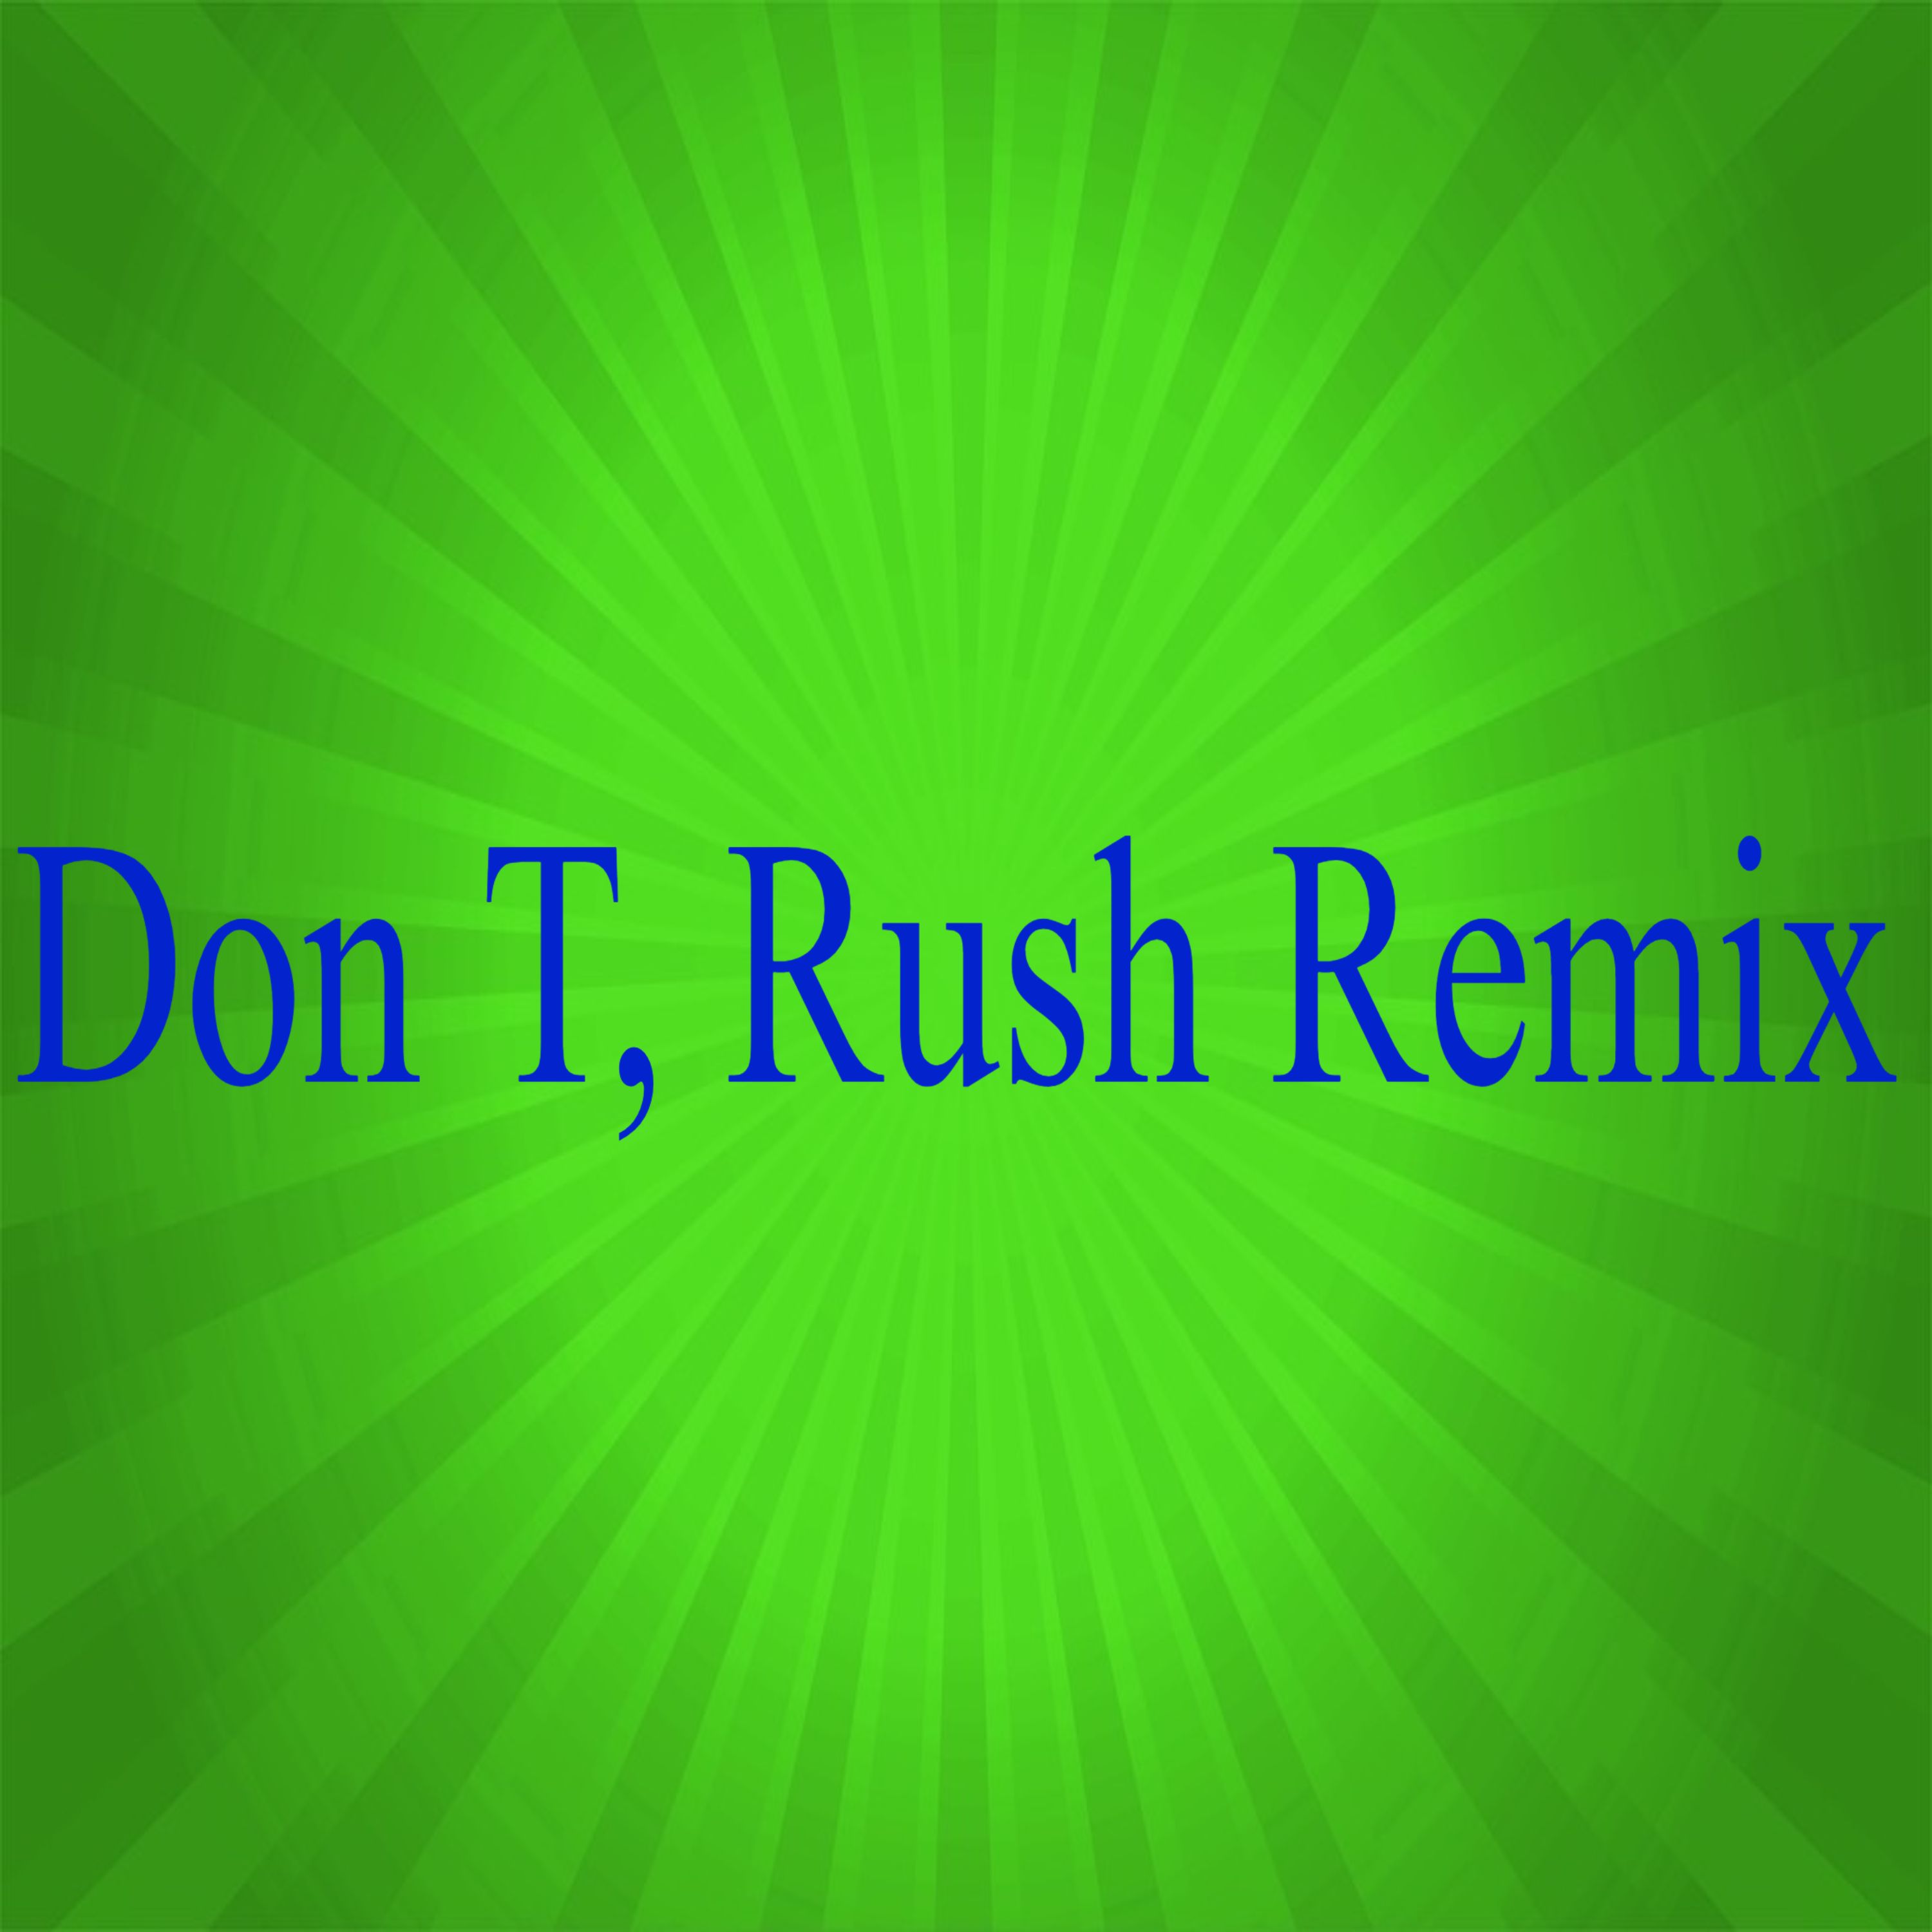 Don't rush remix